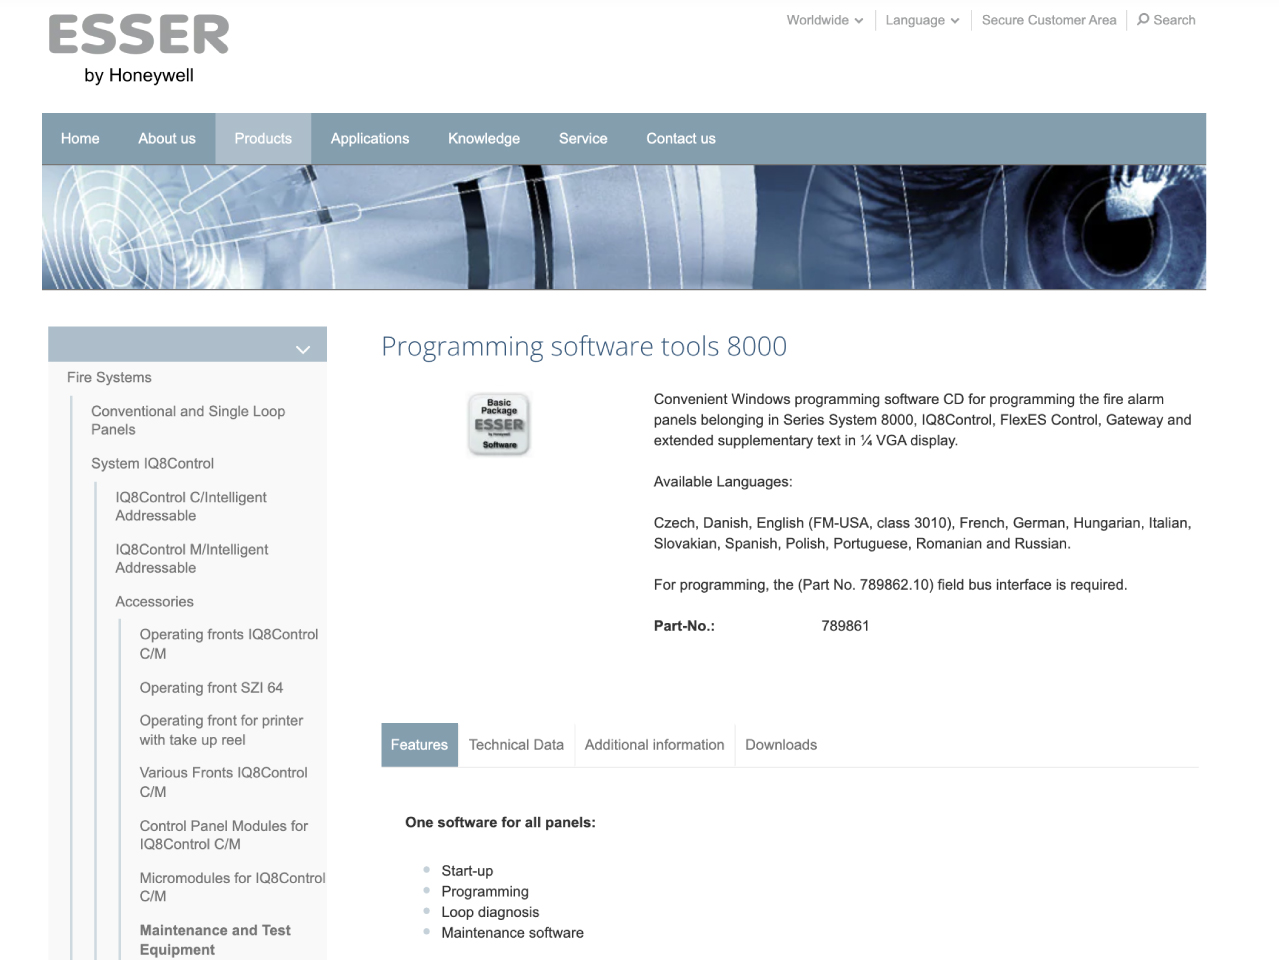 Programming software tools 8000